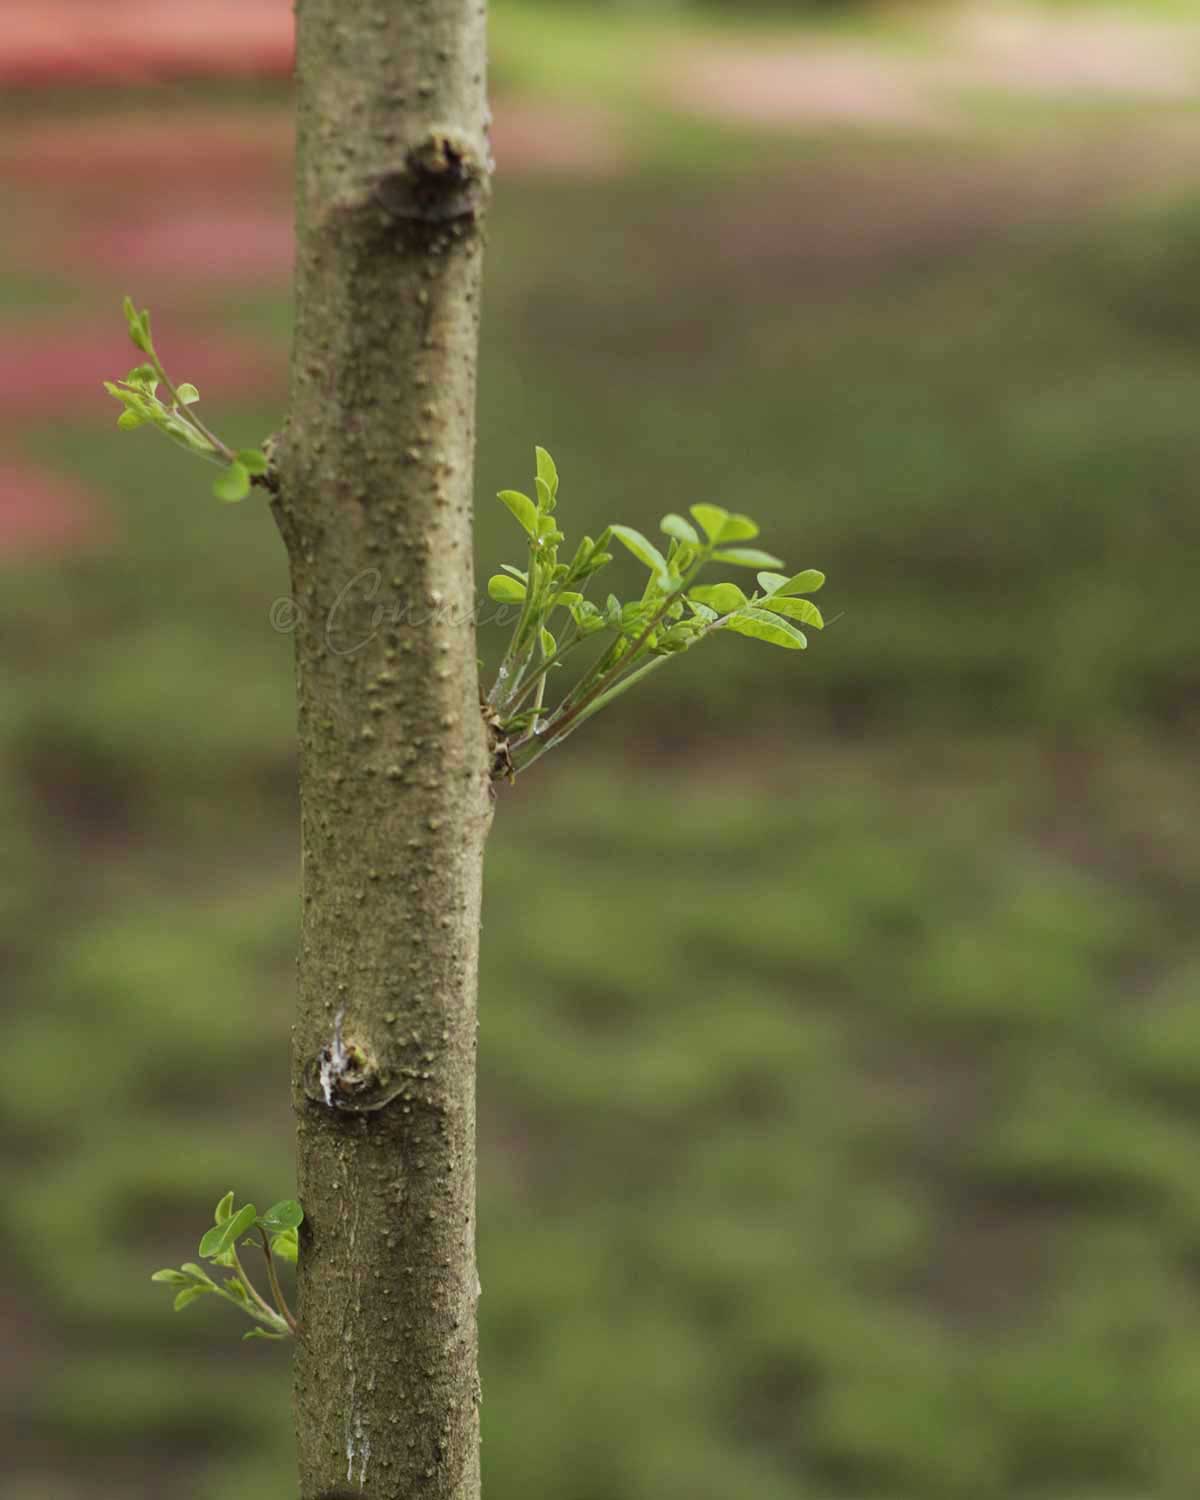 Moringa oleifera (malunggay) tree